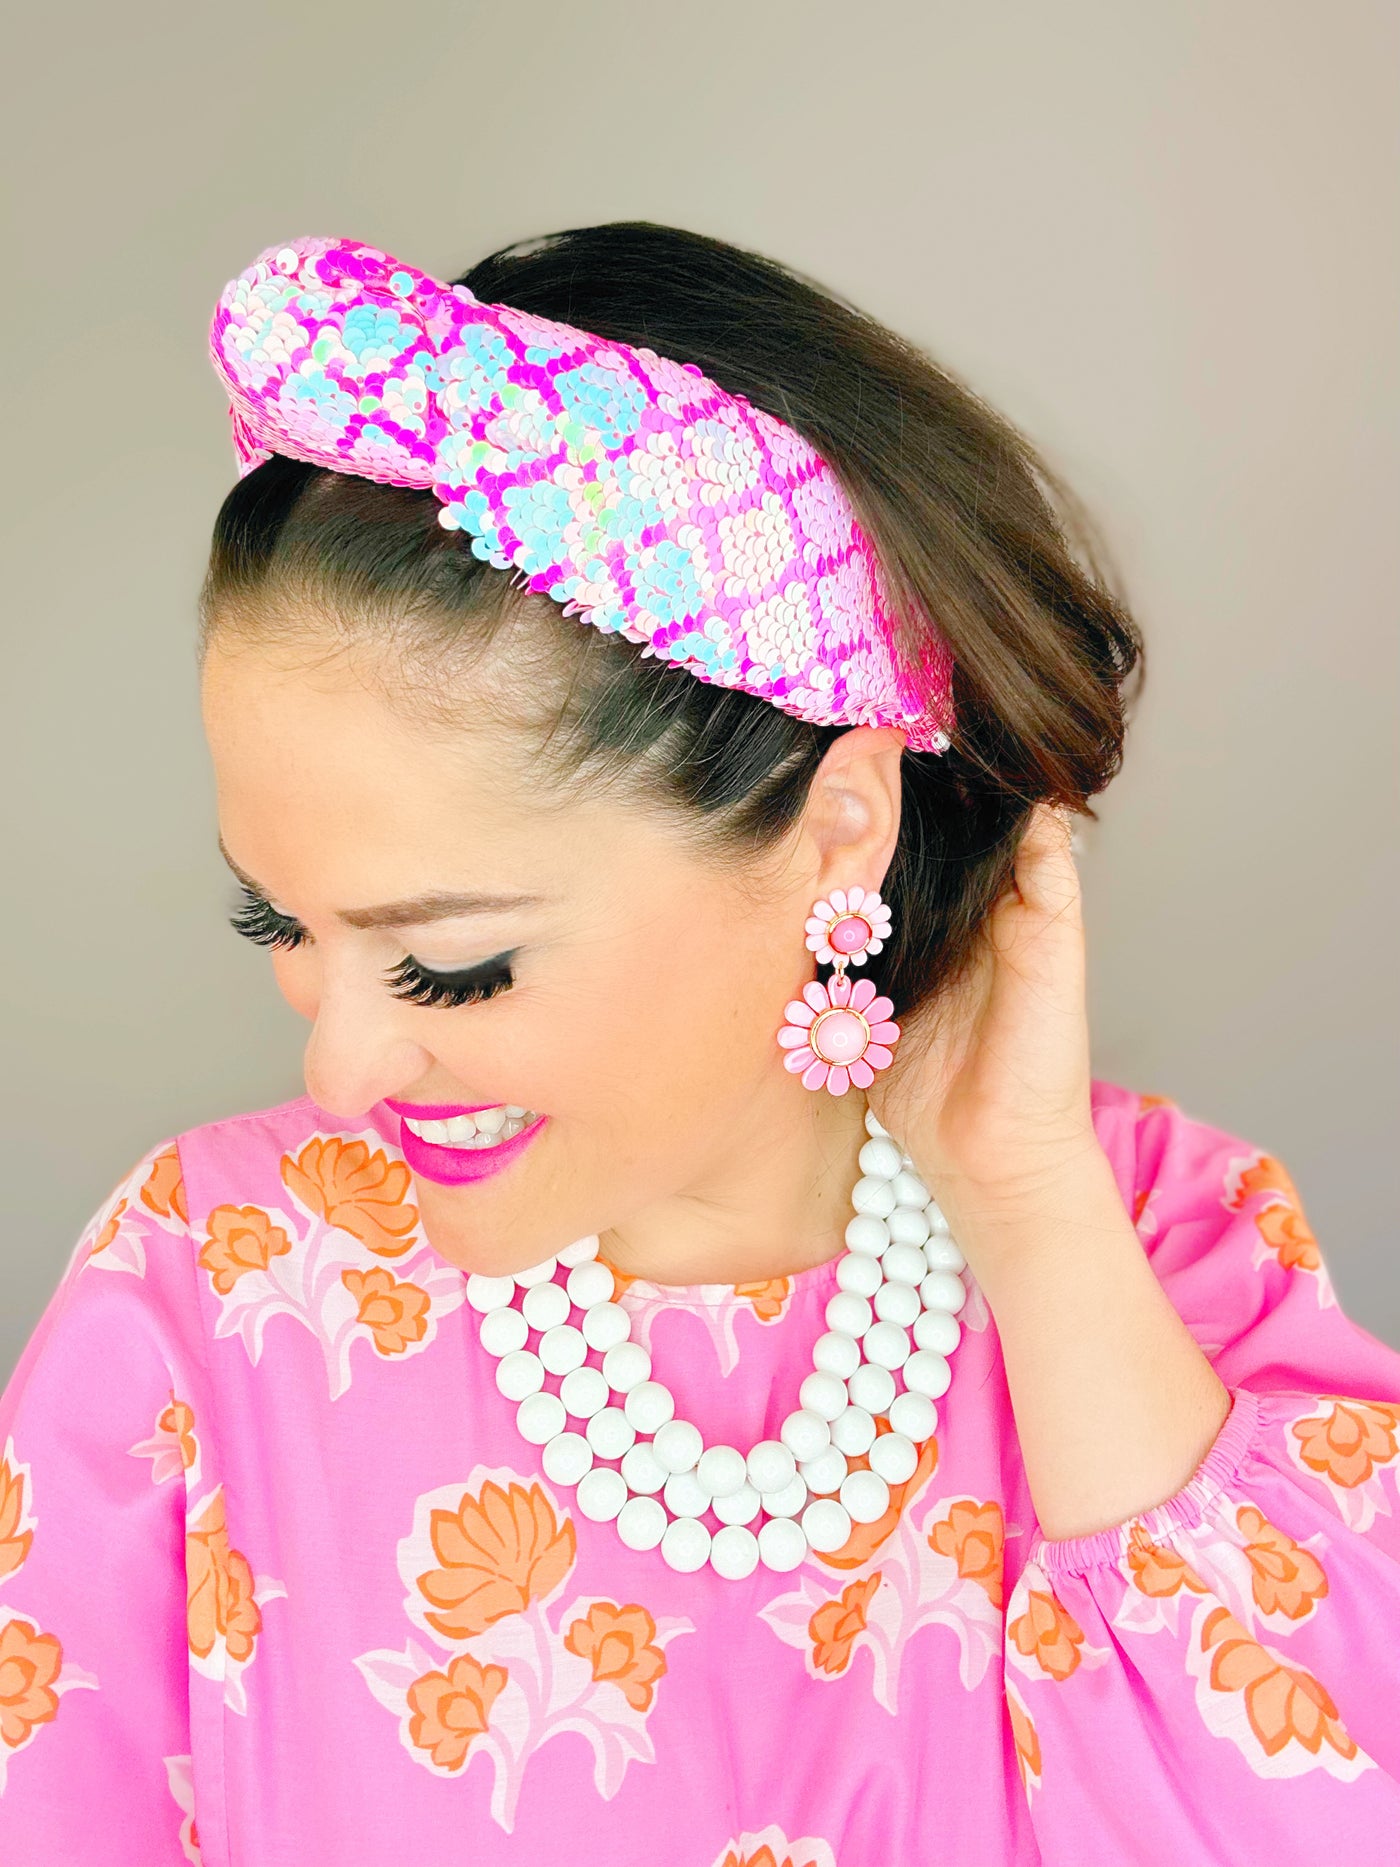 Adult Size Hot Pink Iridescent Sequin Headband